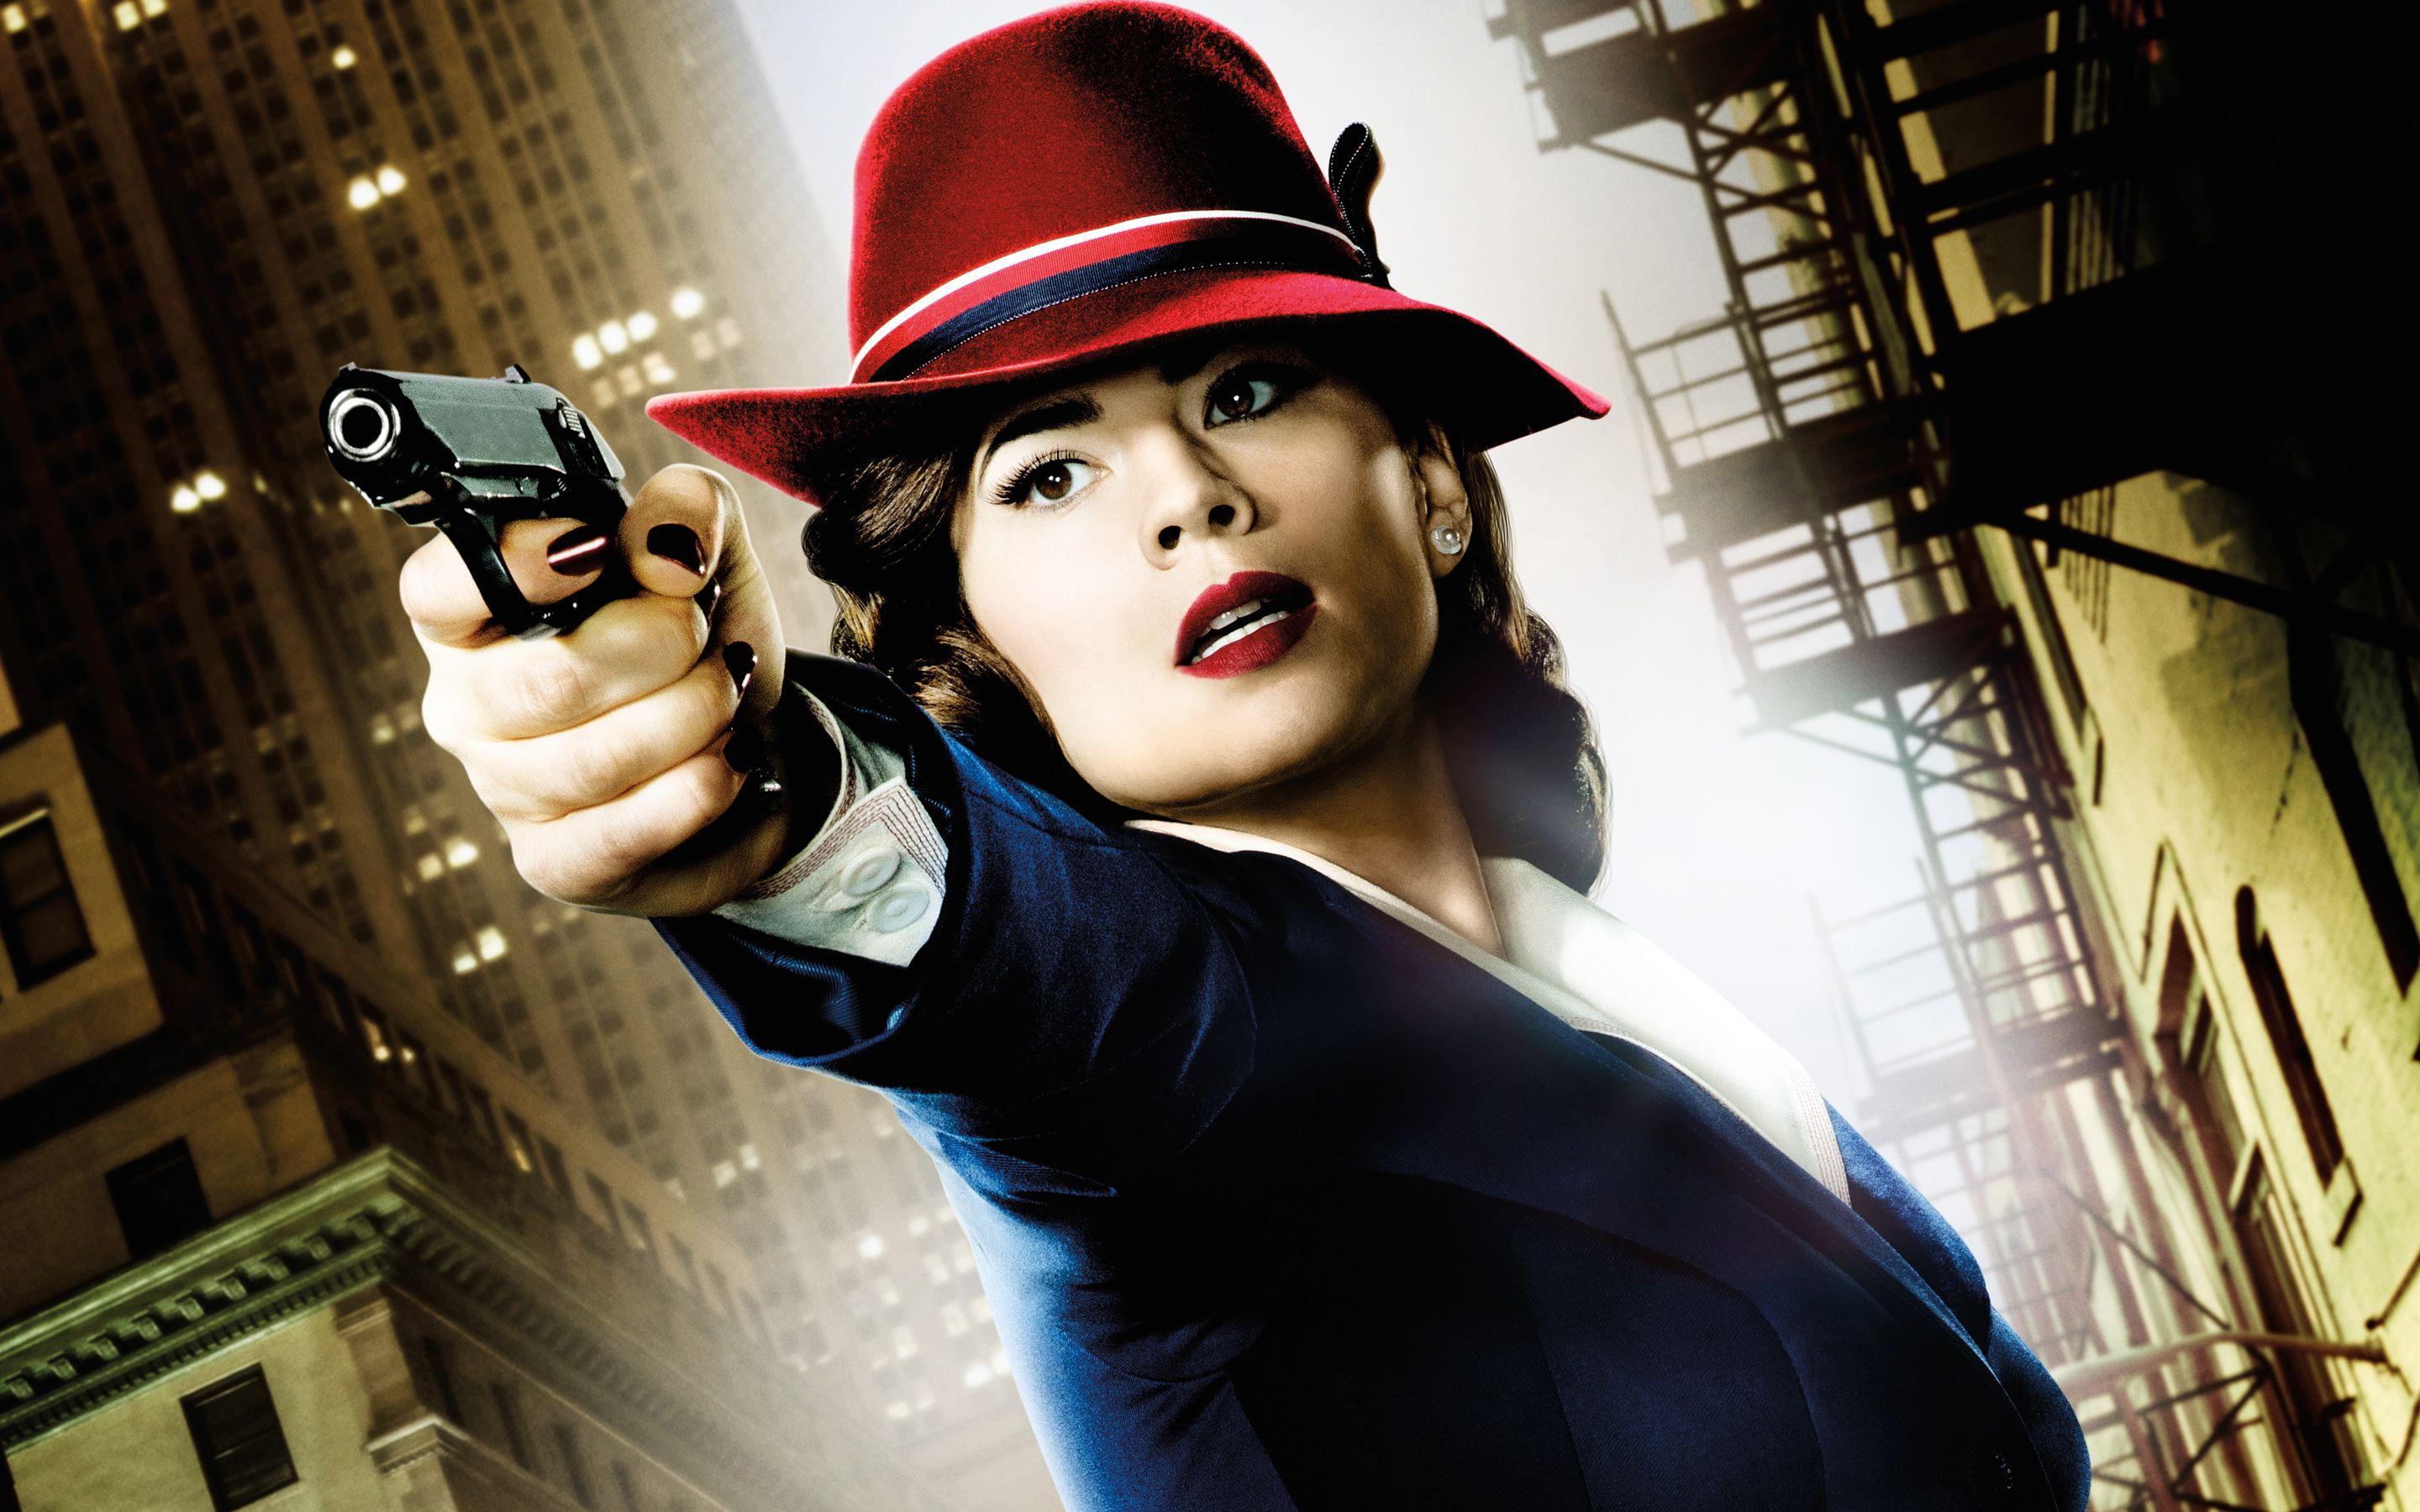 Agent Carter Wallpaper Free Agent Carter Background